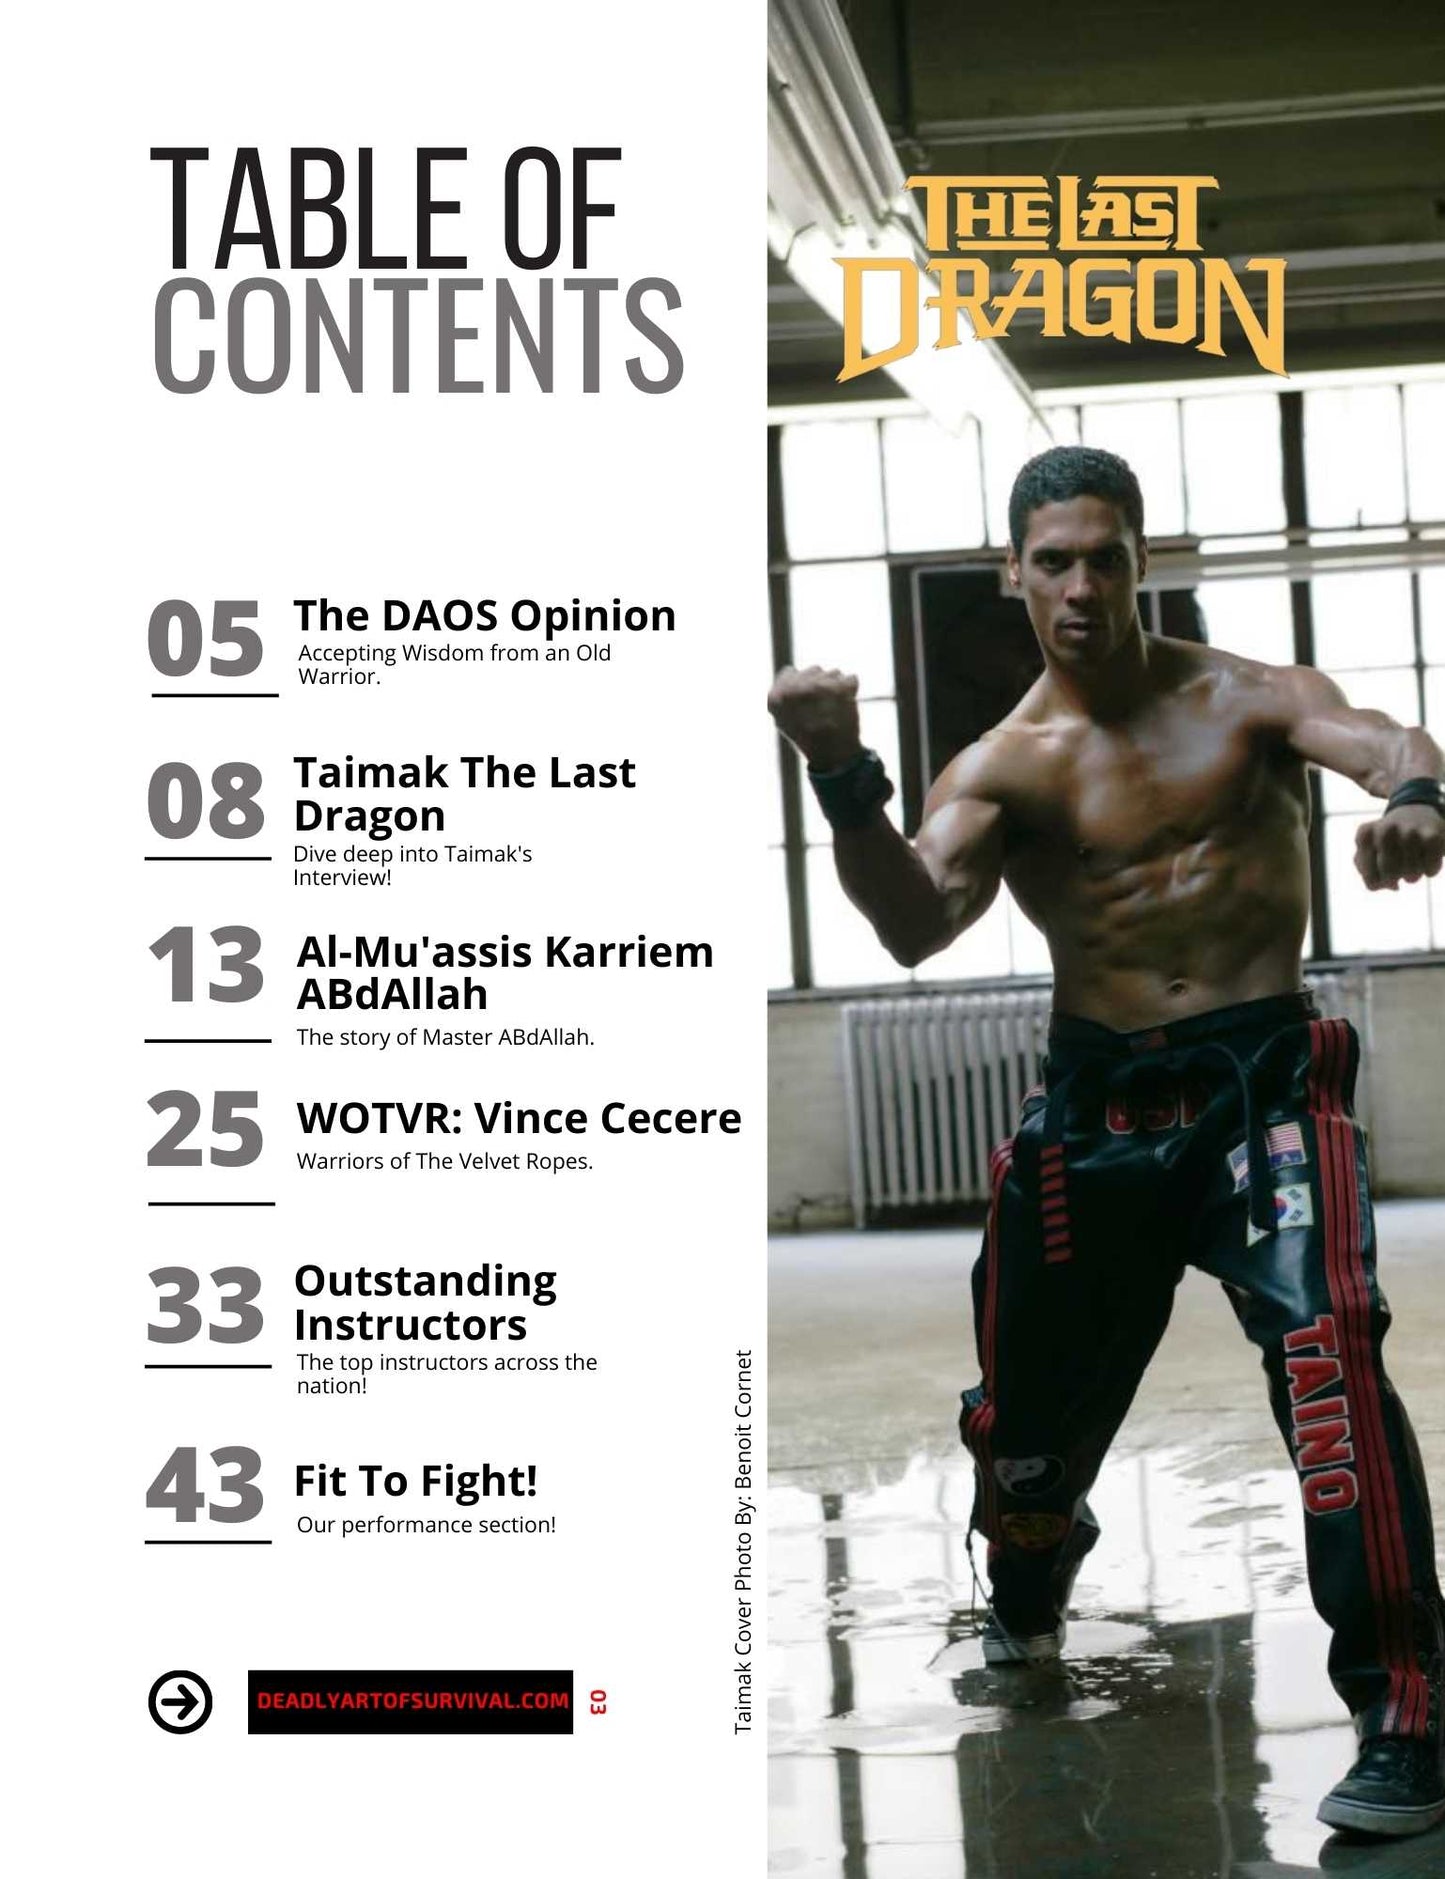 Taimak x Deadly Art of Survival Magazine 11th Edition The #1 Martial Arts Magazine Worldwide deadlyartofsurvival.com